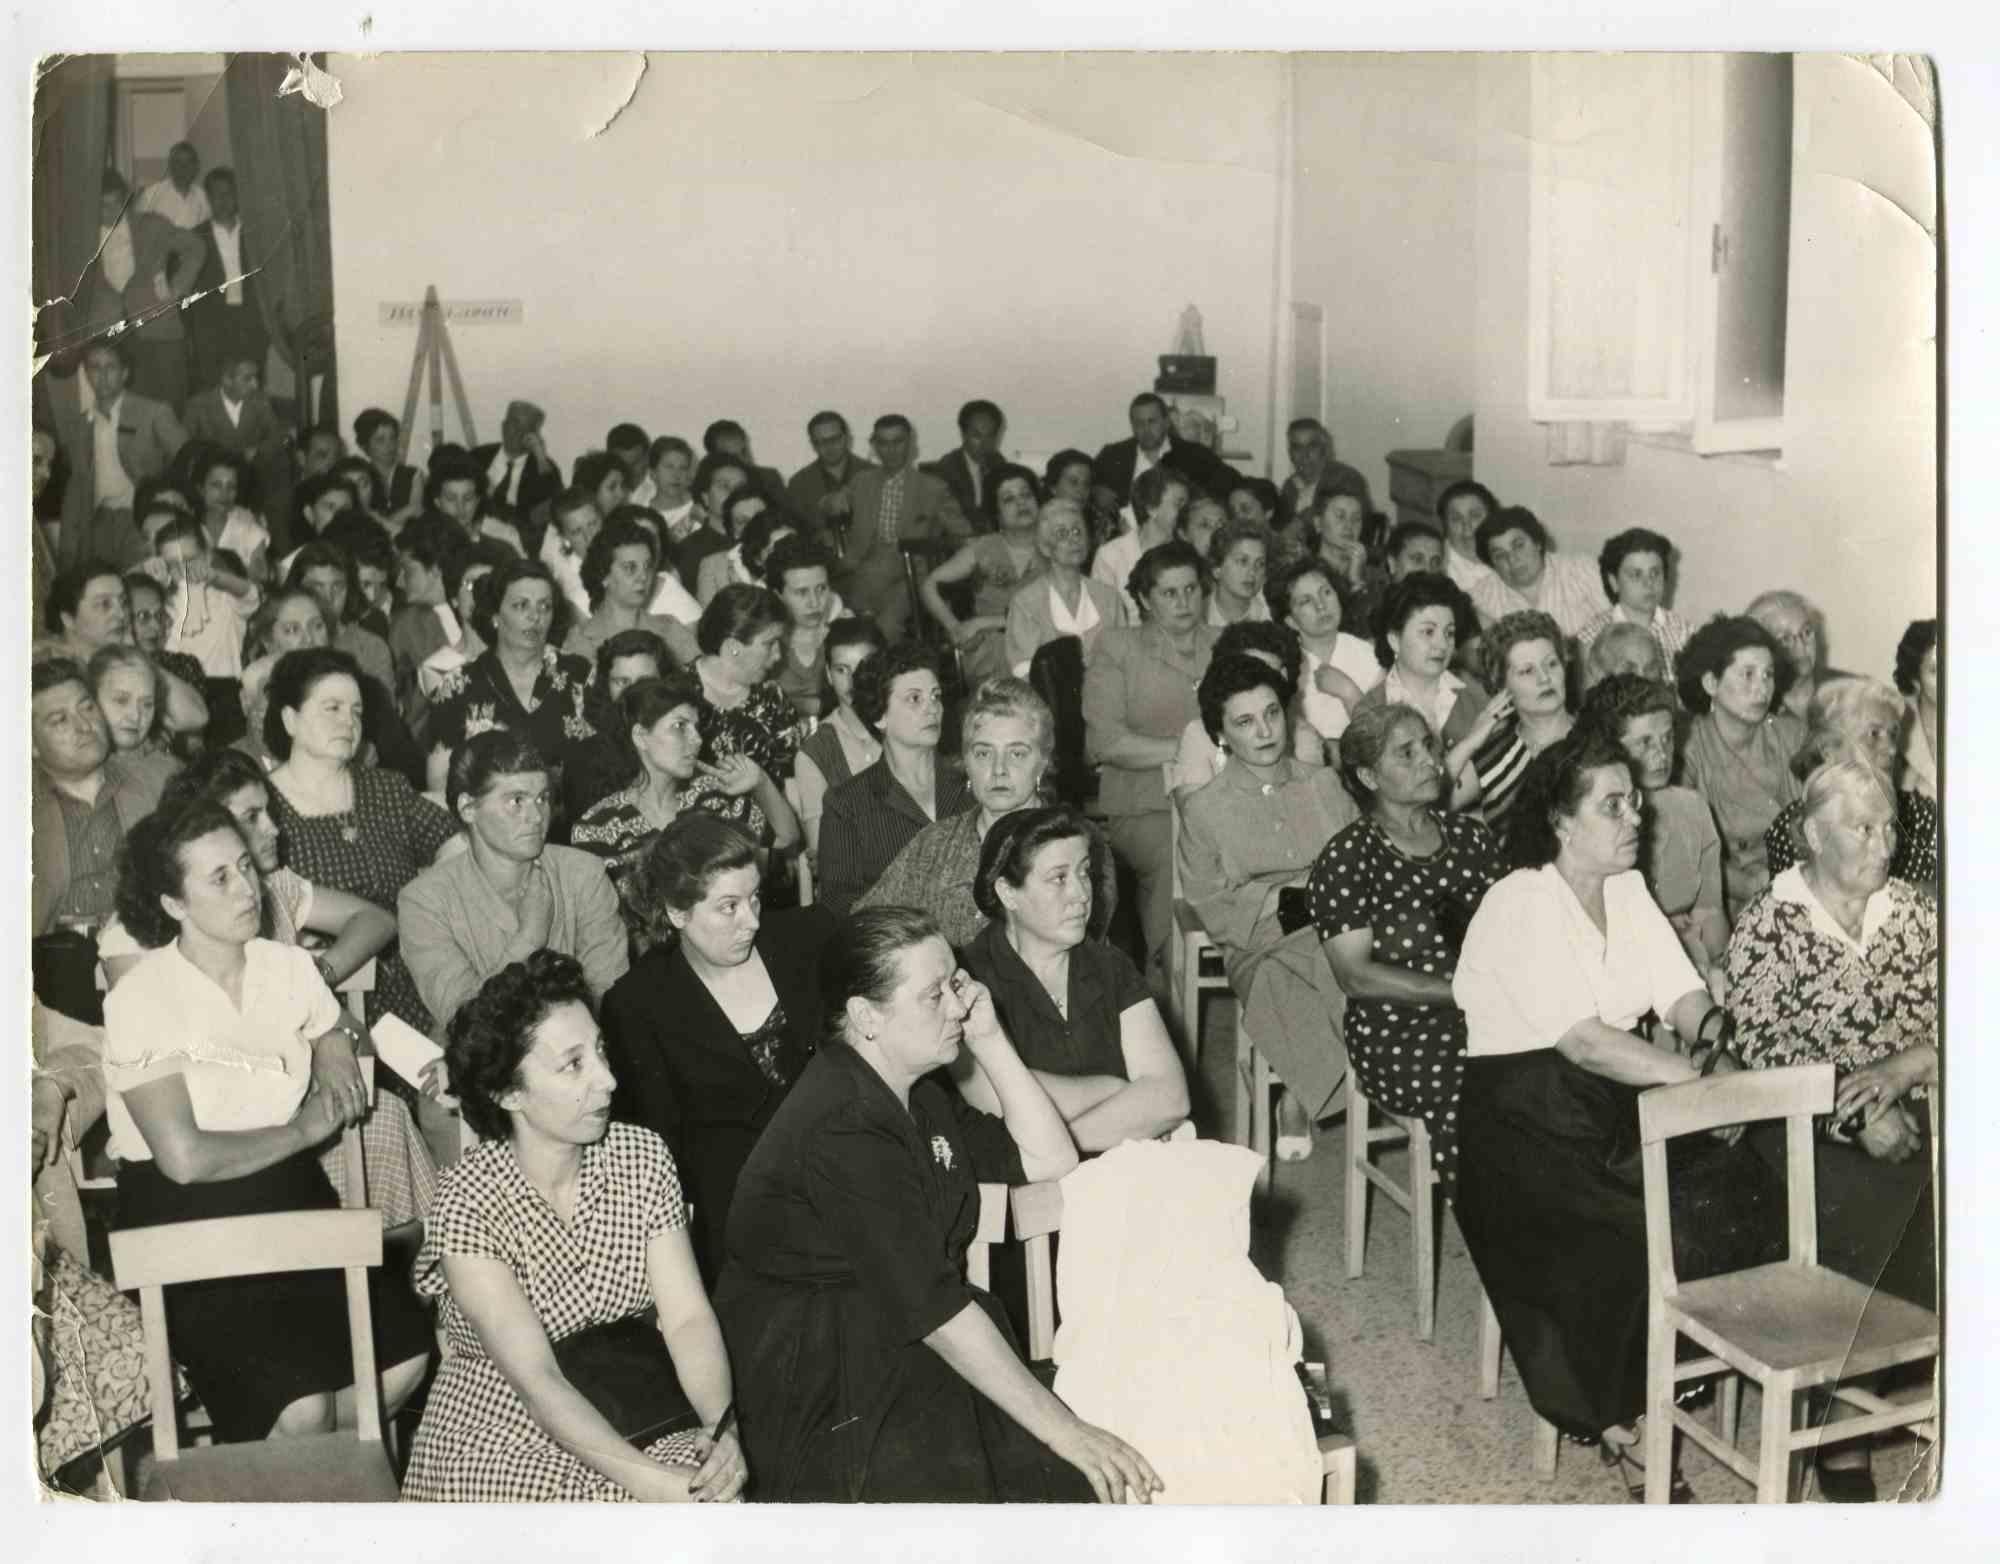 Unknown Portrait Photograph - The Lecture - Vintage Photograph About Women Rights - 1960s